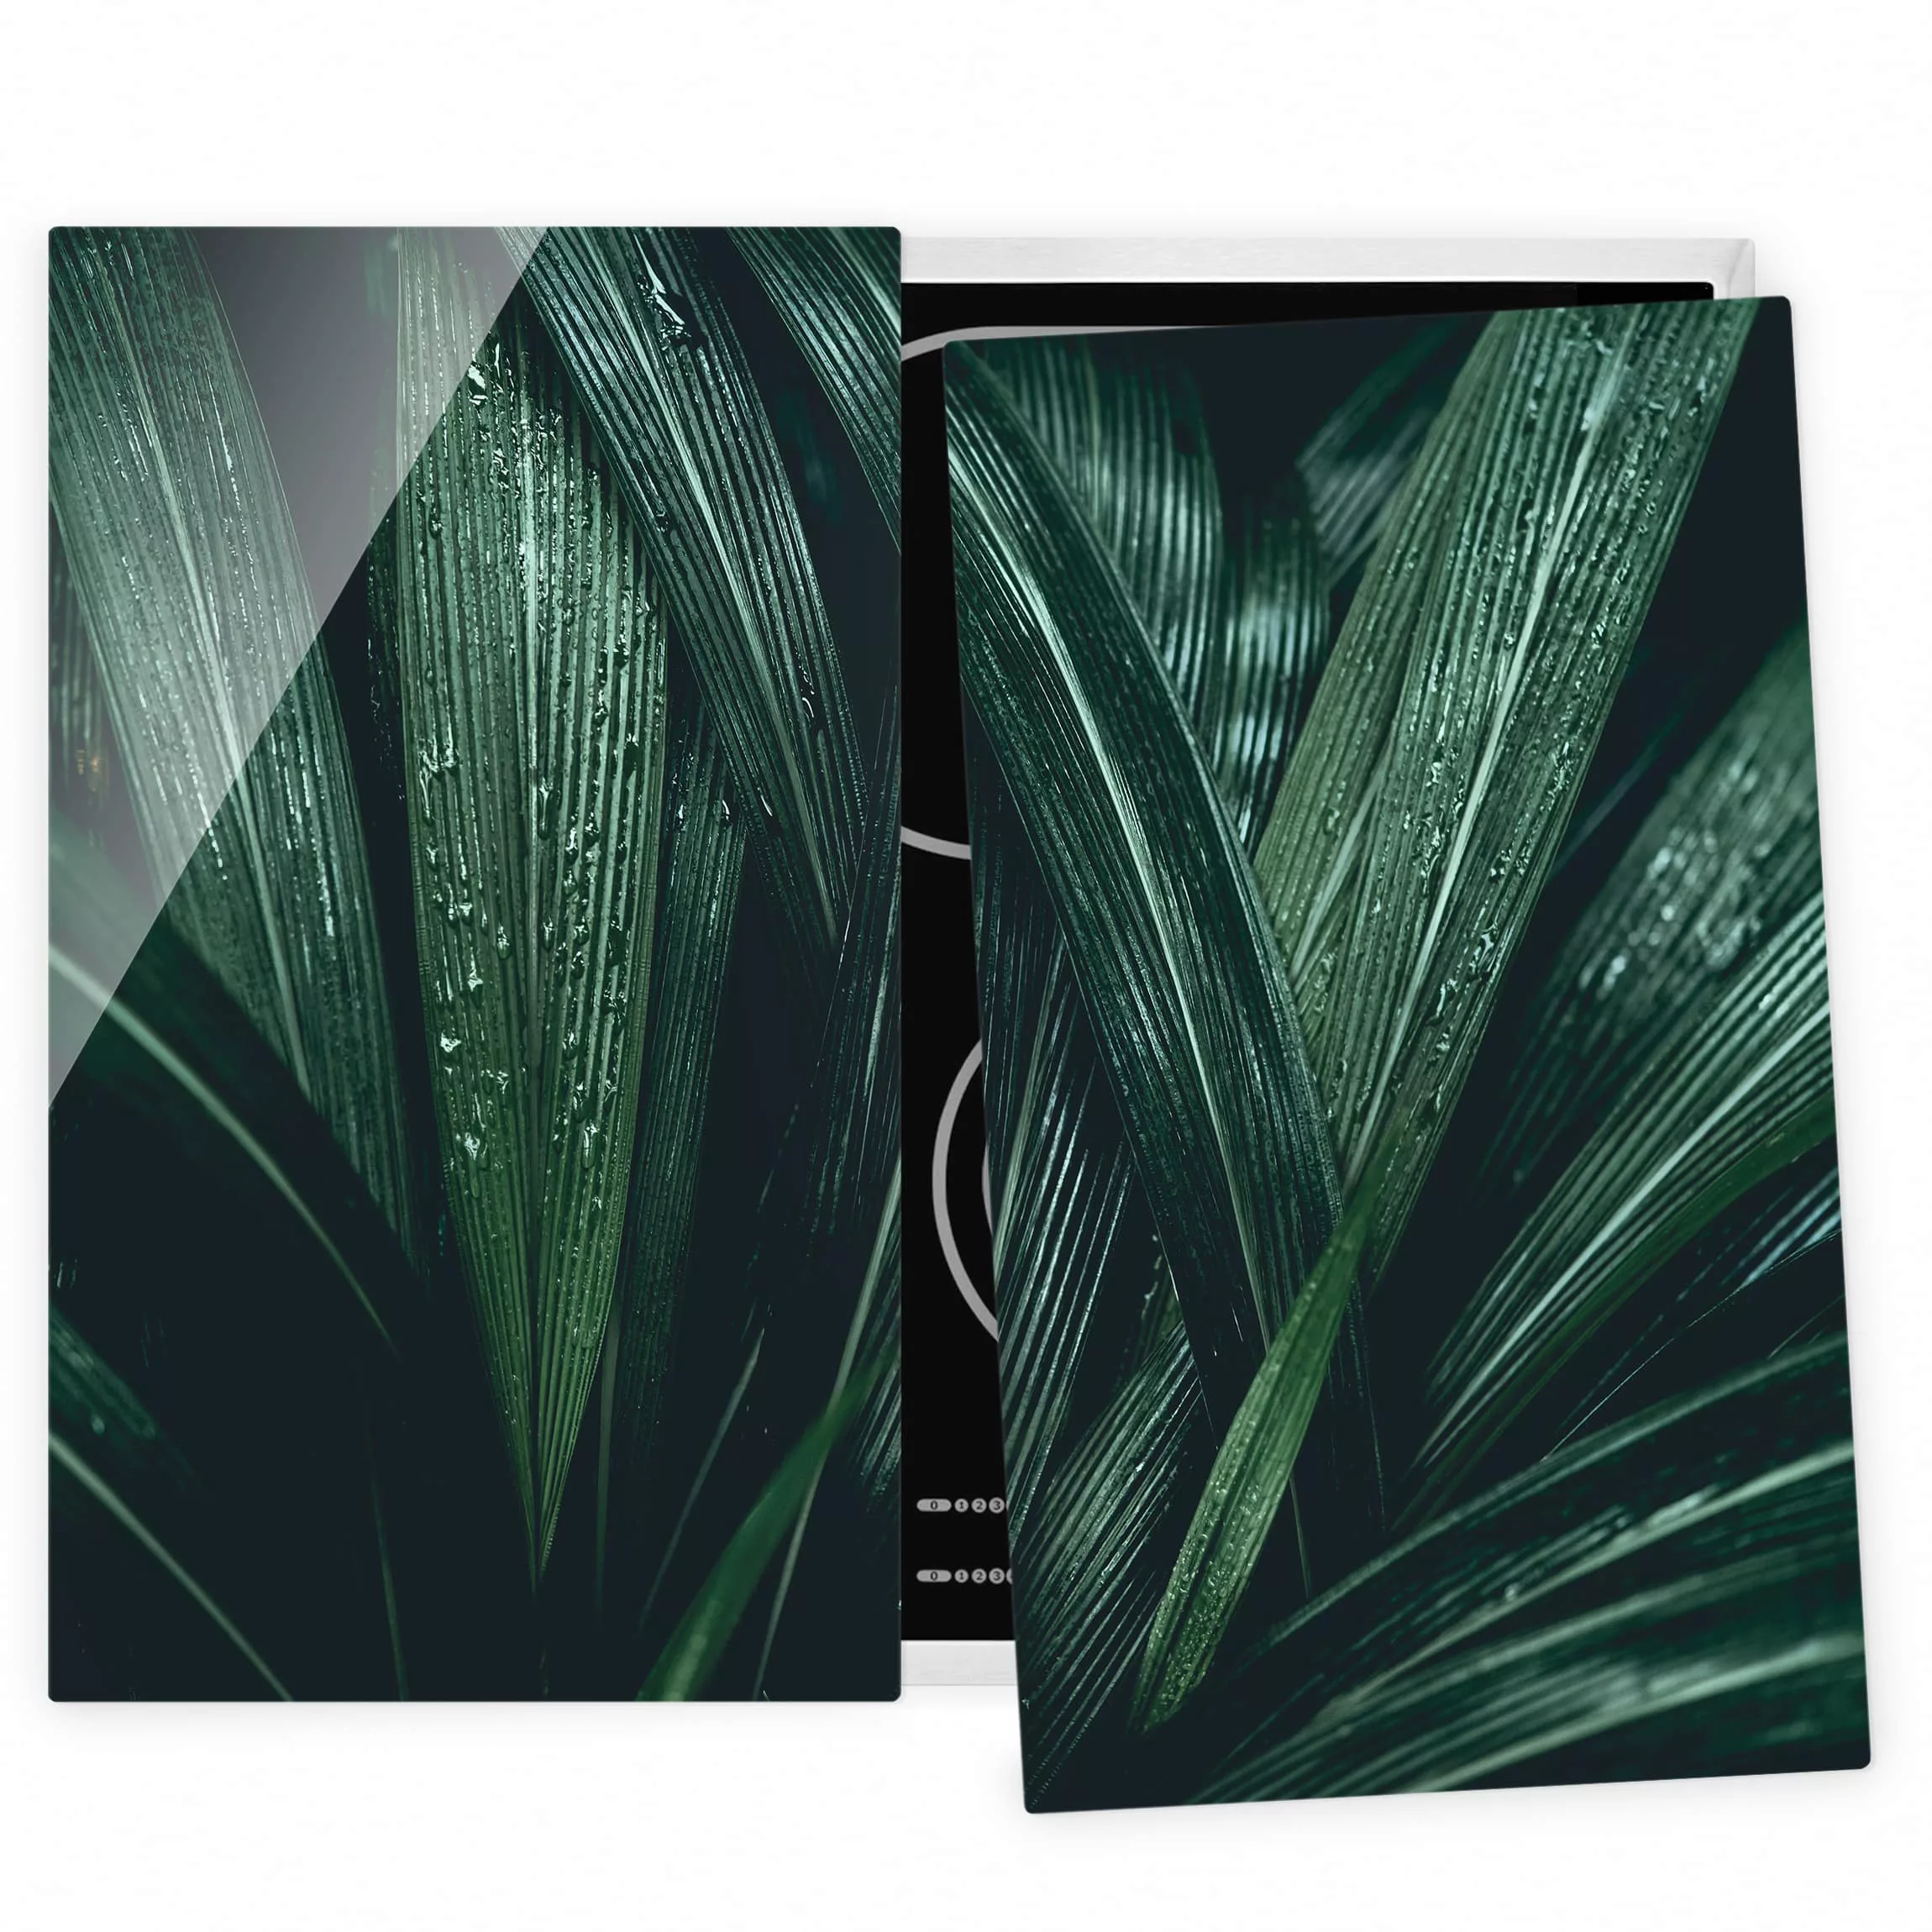 2-teilige Herdabdeckplatte Glas Botanik Grüne Palmenblätter günstig online kaufen